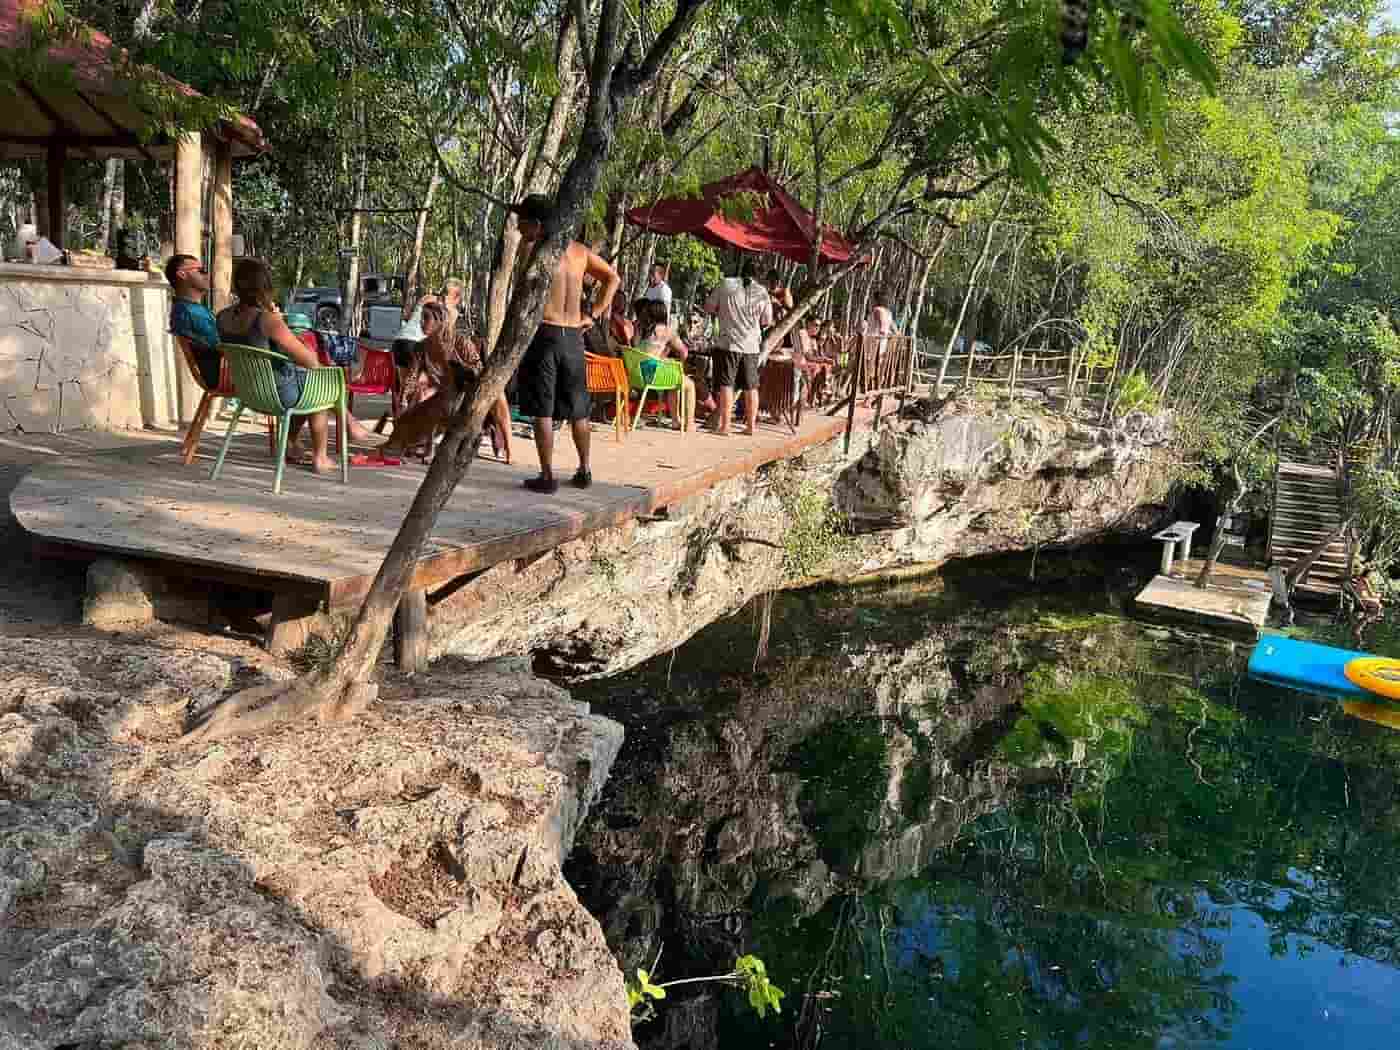 Restaurant Cenote Jardin del Eden